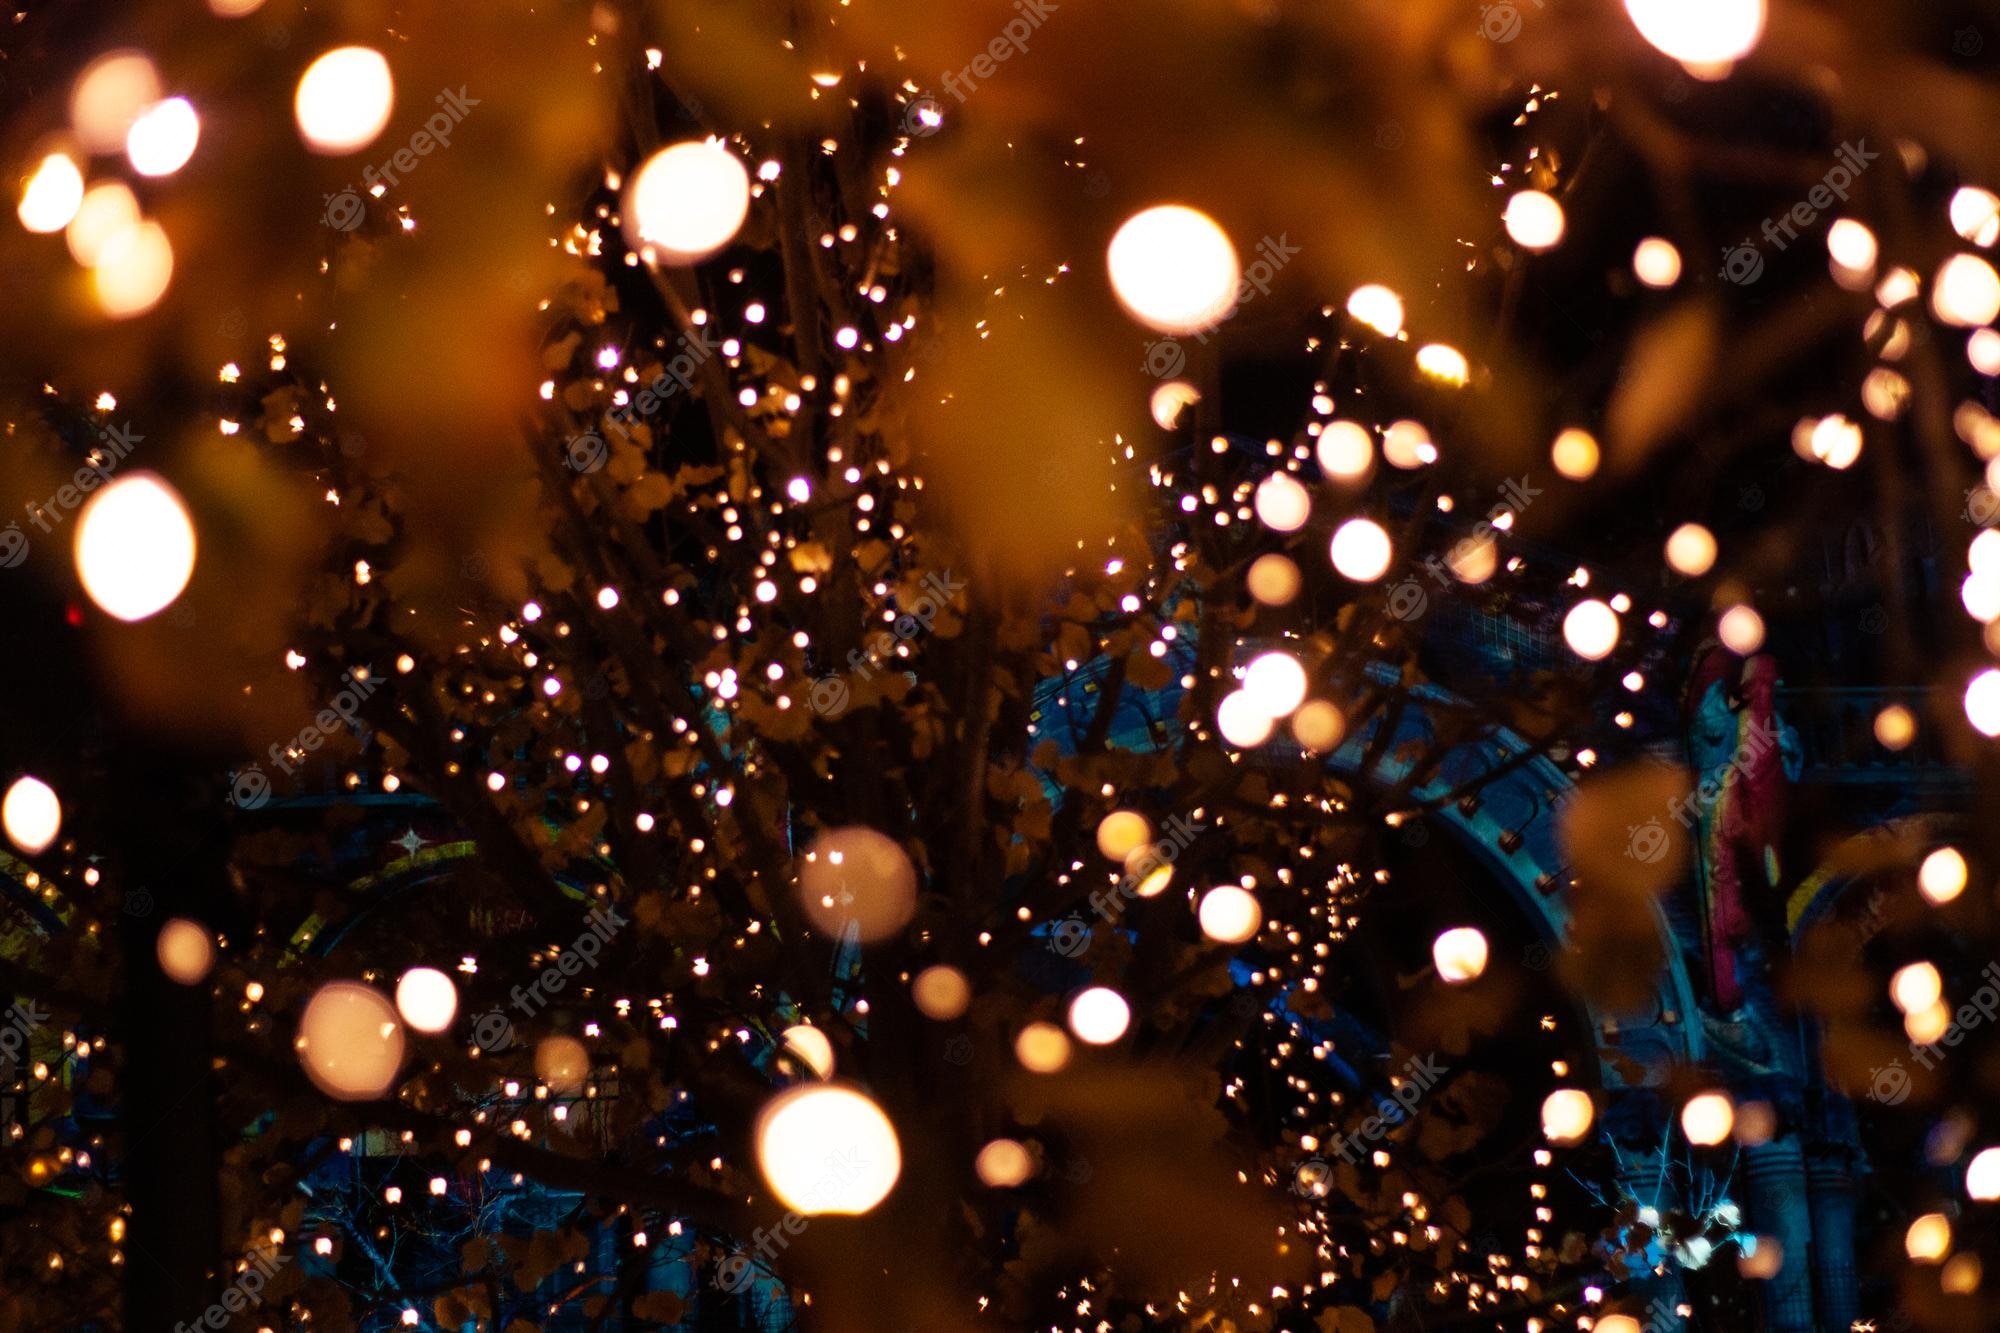 Christmas lights blur Image. Free Vectors, & PSD